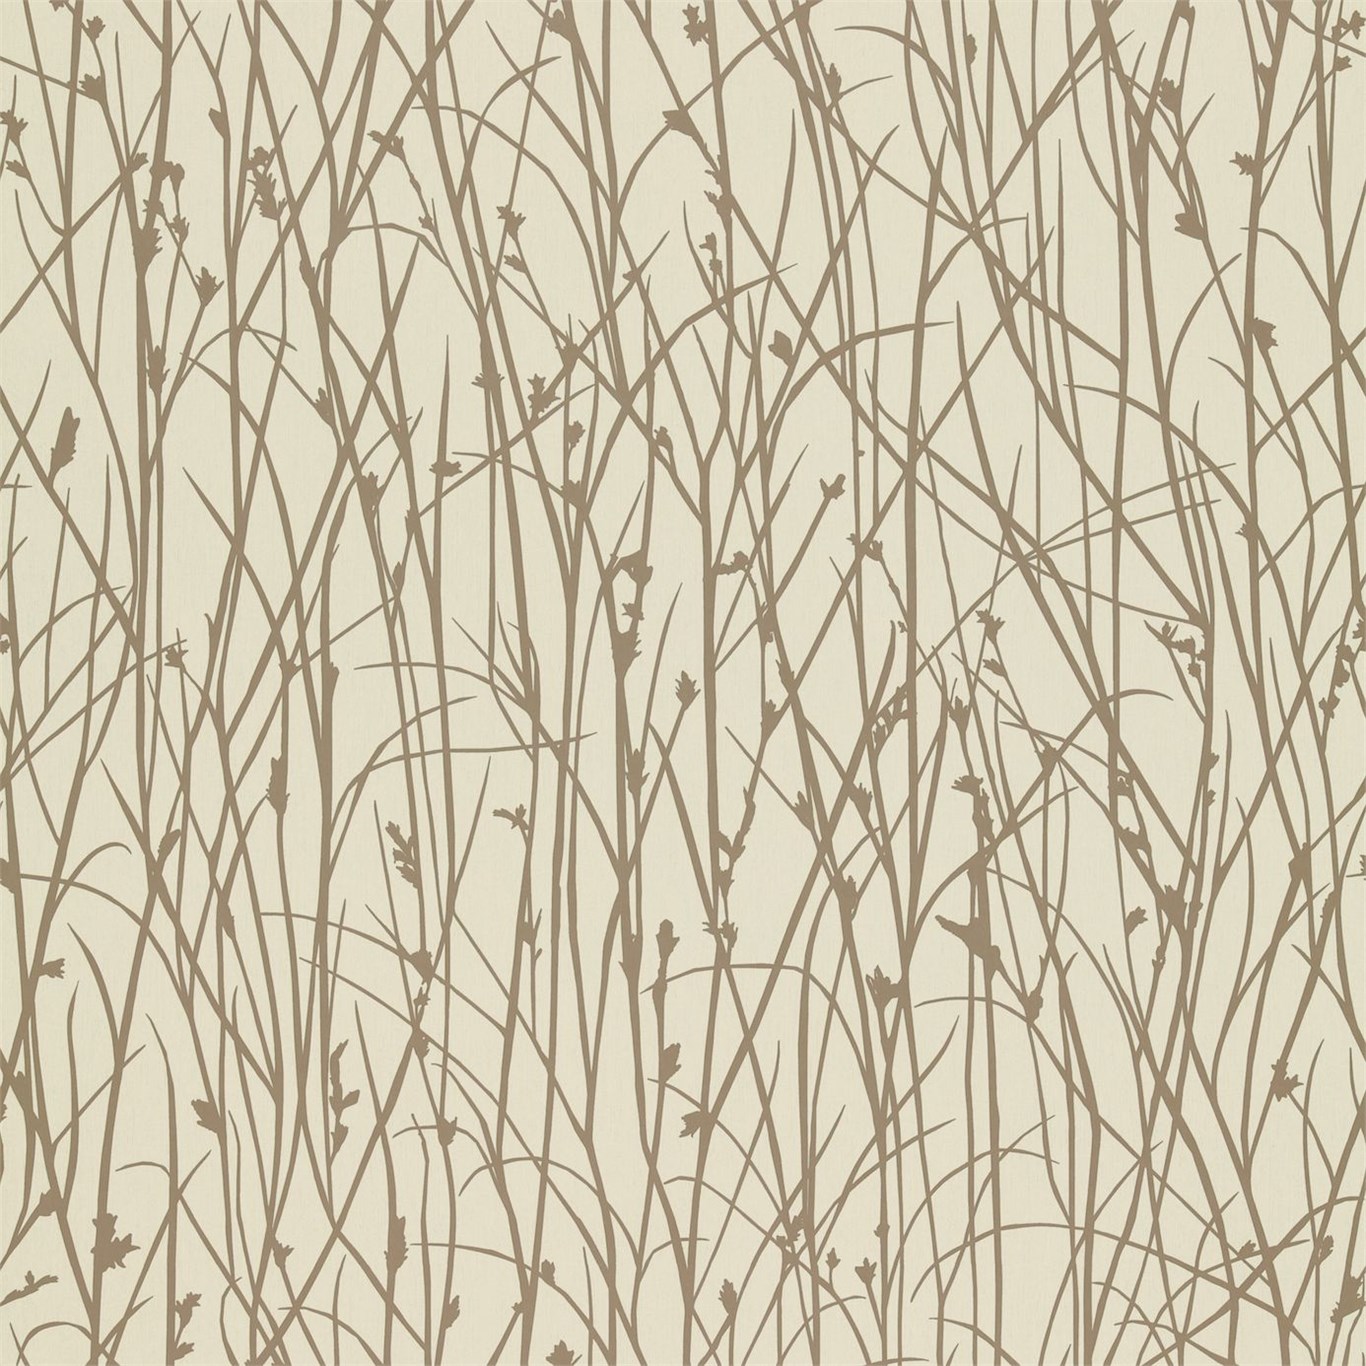 Harlequin Grasses Wallpaper HD Wallpapers Download Free Images Wallpaper [wallpaper981.blogspot.com]